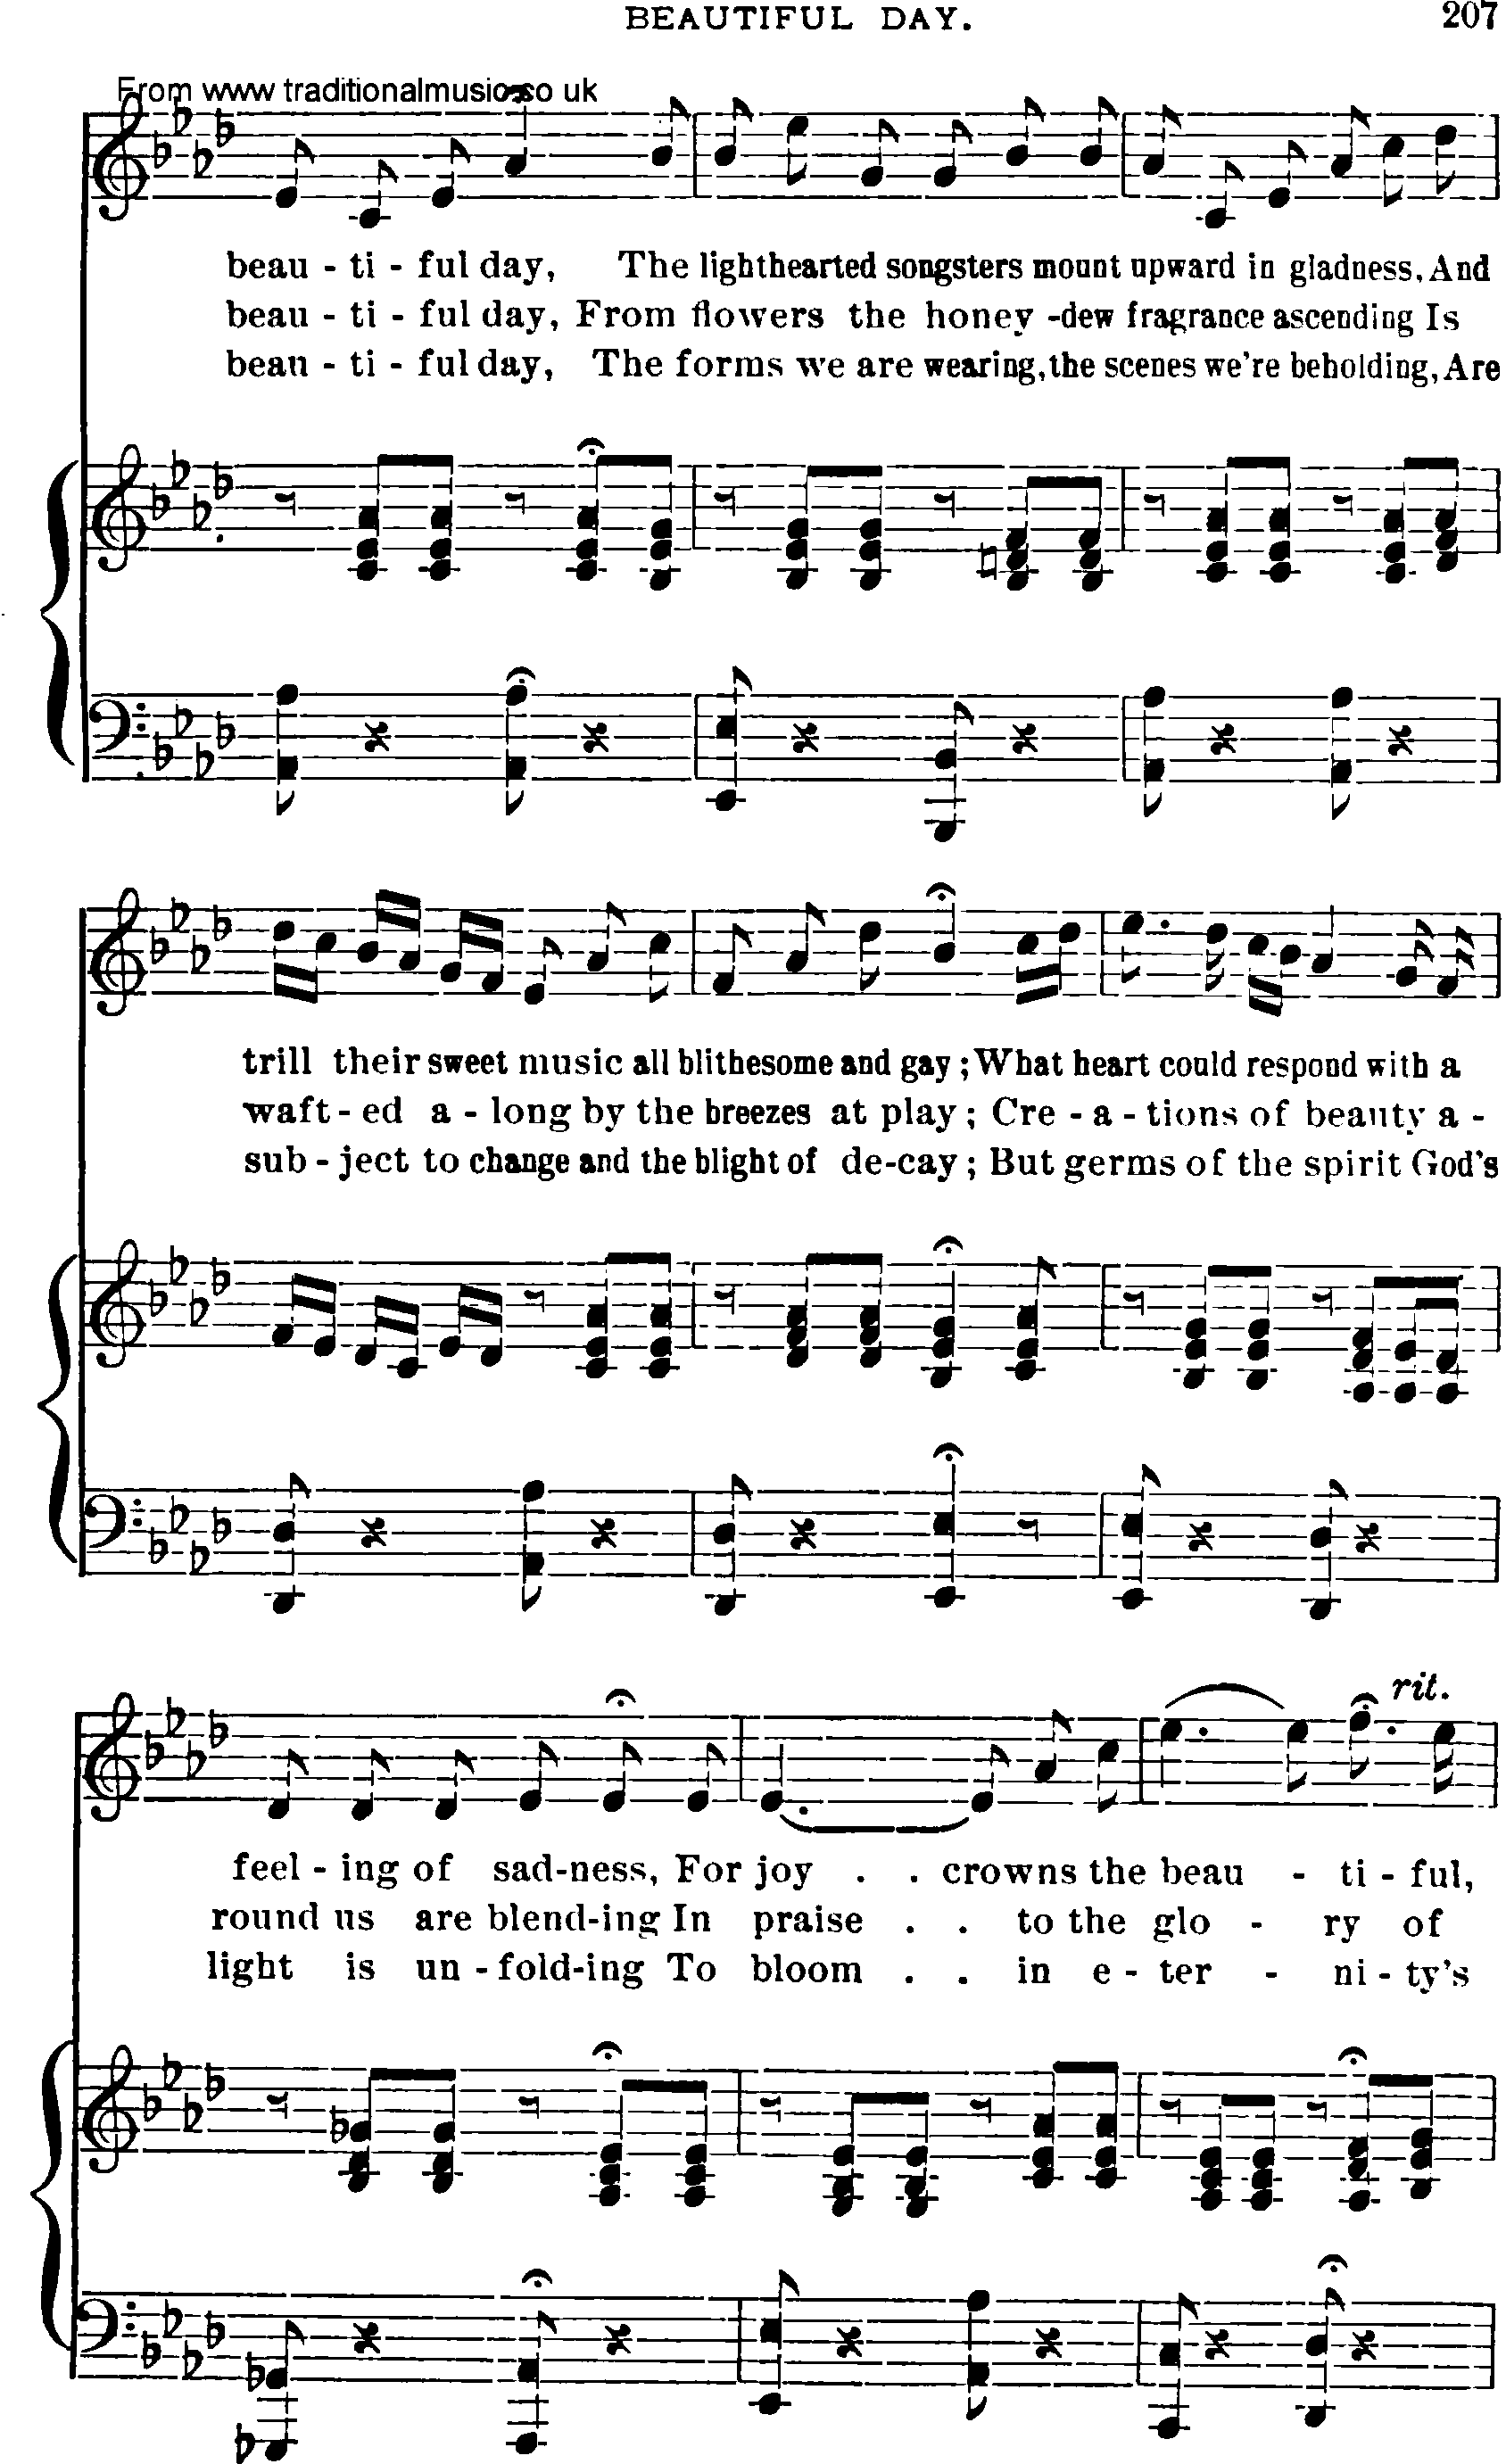 Shaker Music collection, Hymn: Beautiful day, sheetmusic and PDF